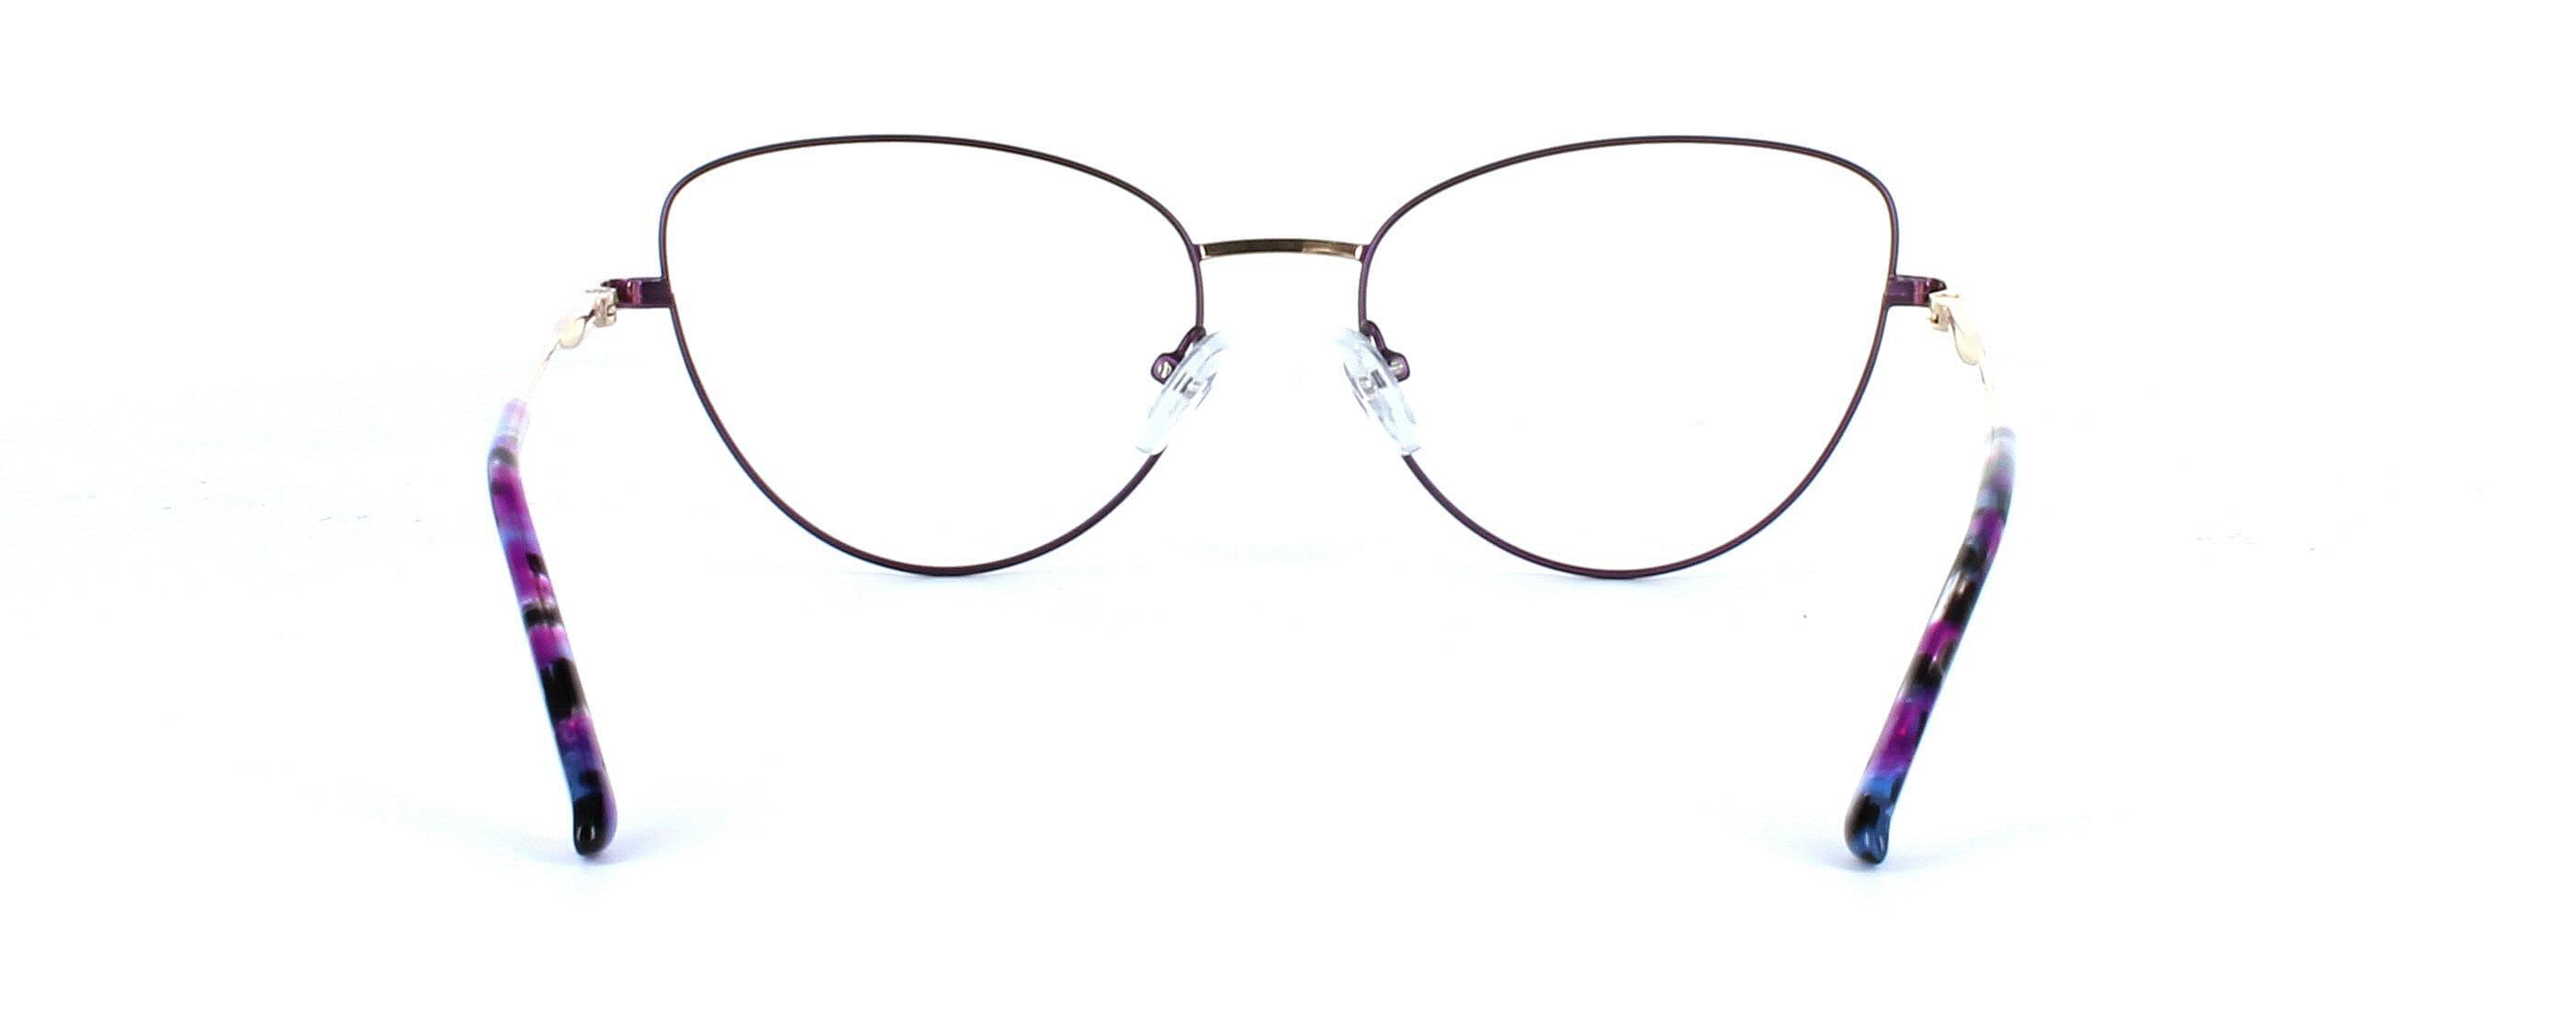 Ladies cat eye 2-tone metal glasses frame - image view 3